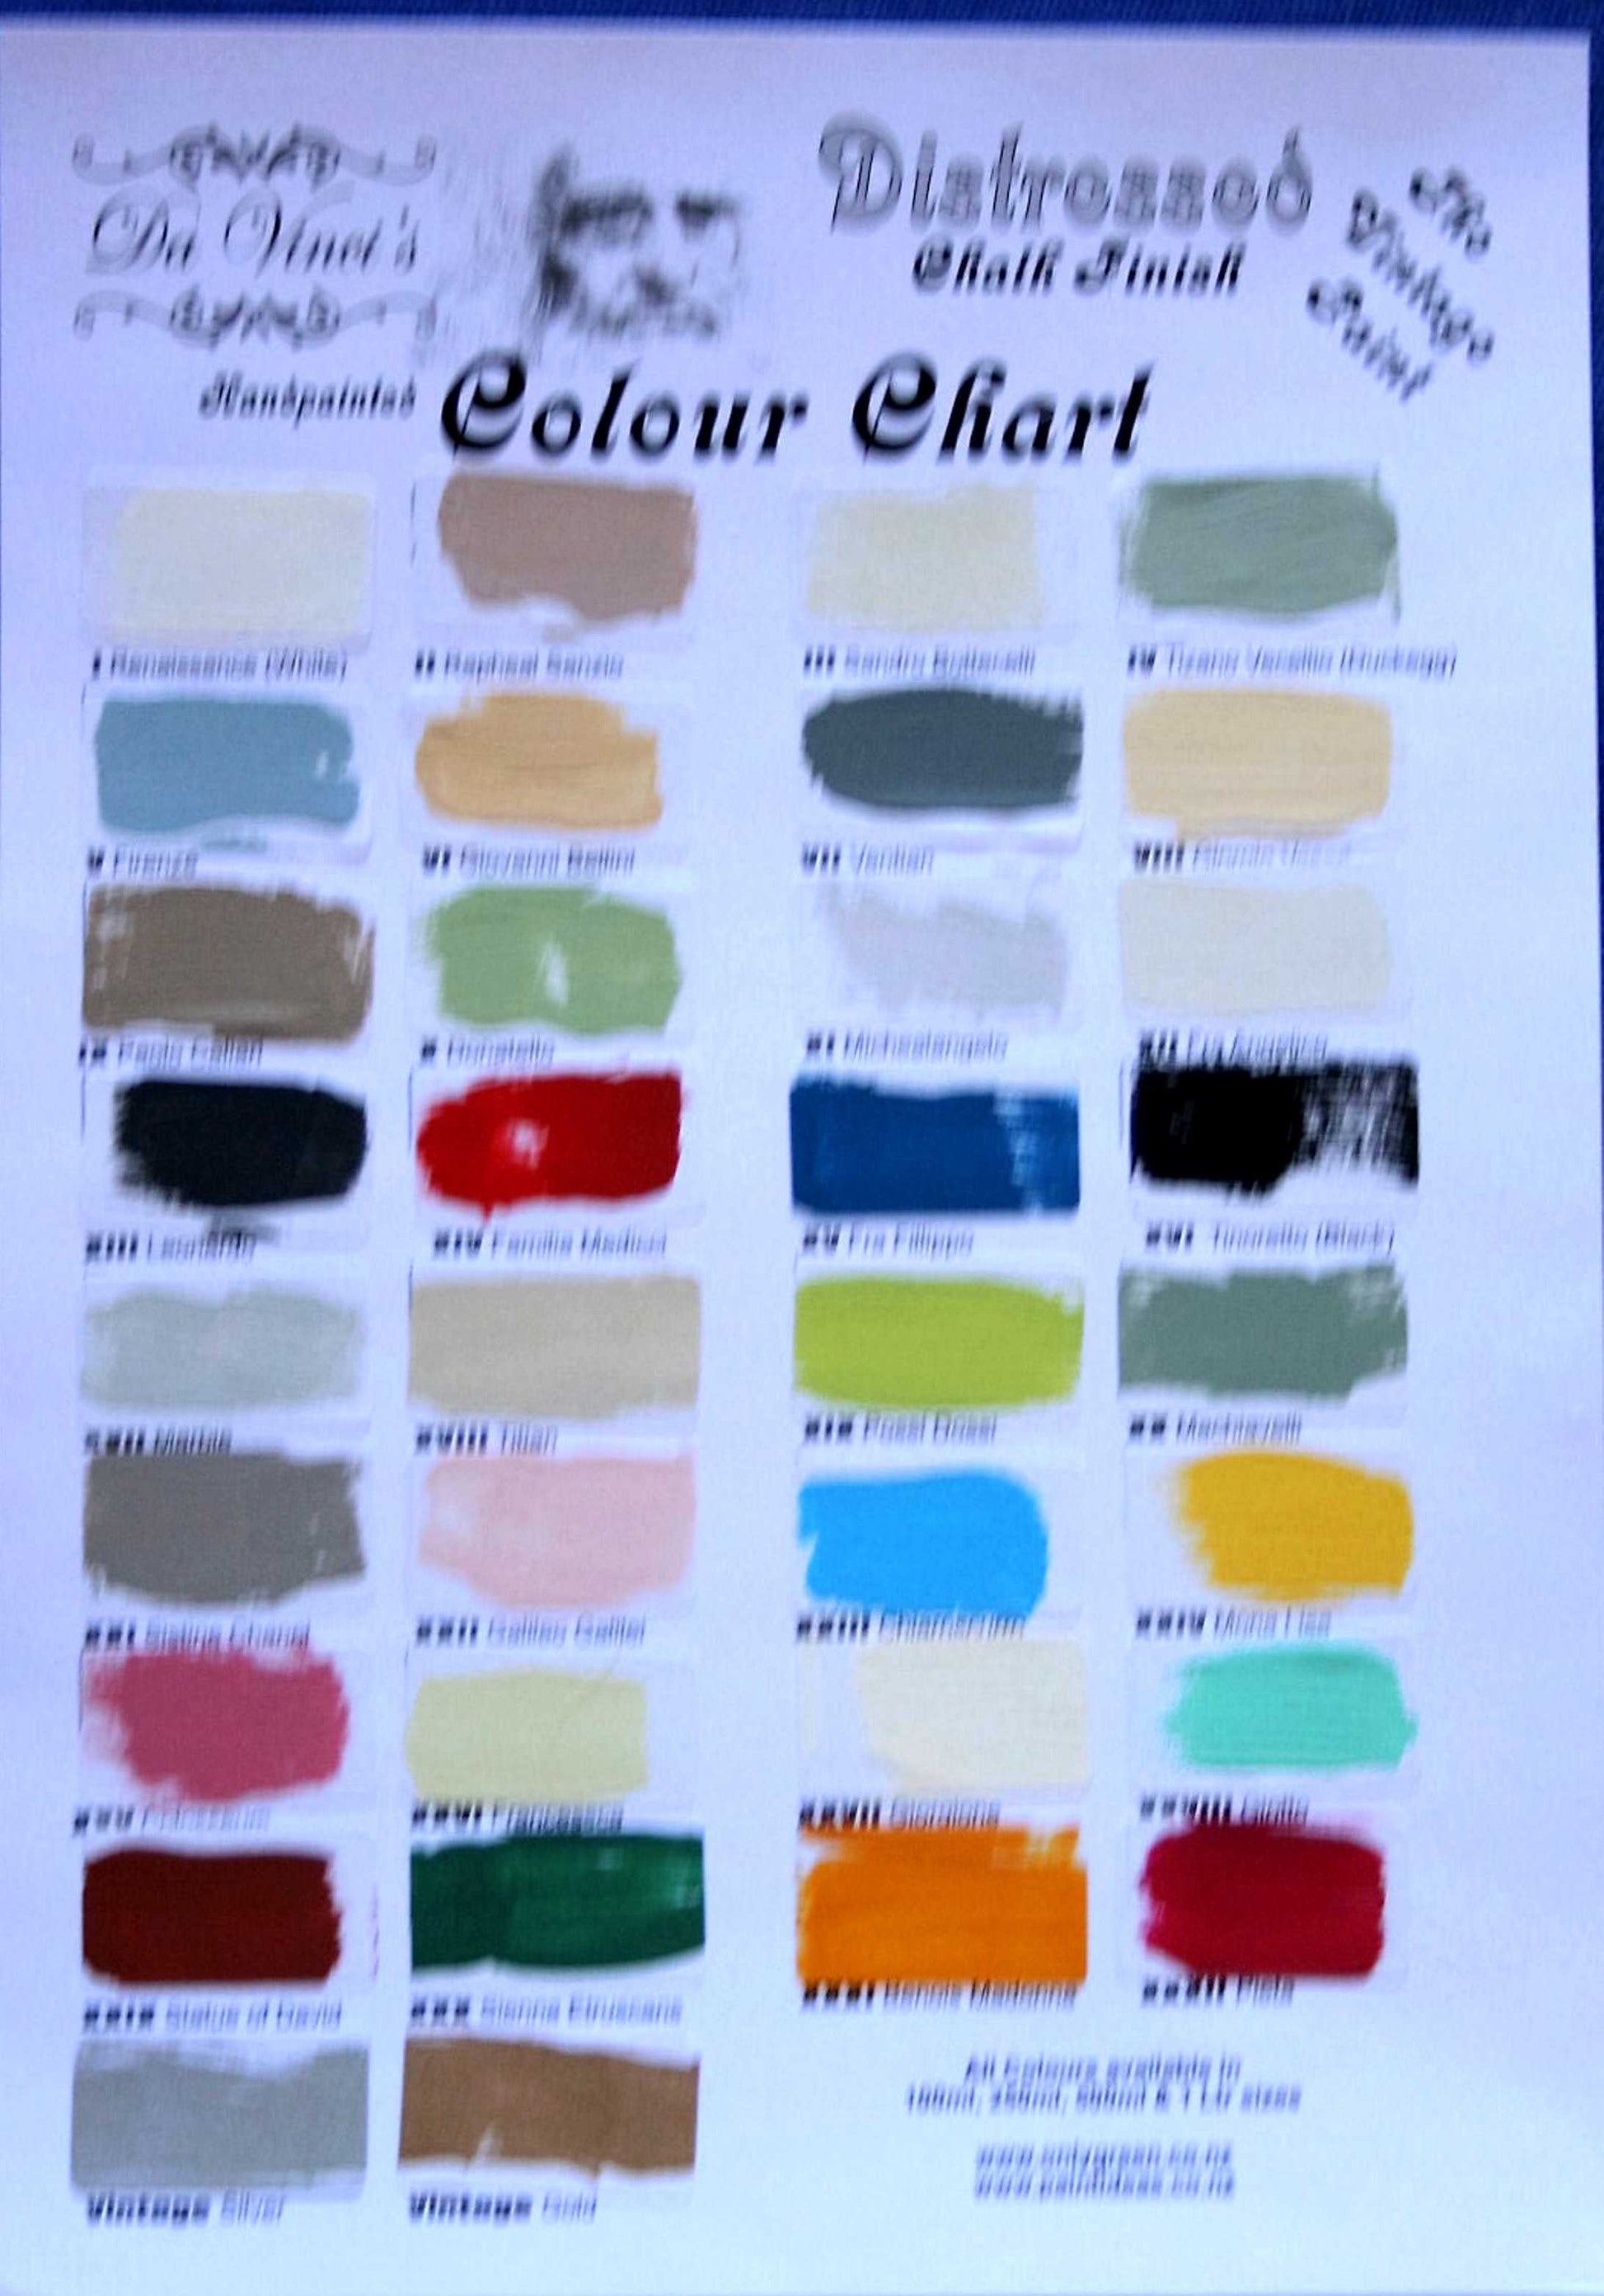 Da Vinci Chalk Finish Colour Chart - Da Vinci Chalk Paint & Rustic home decor